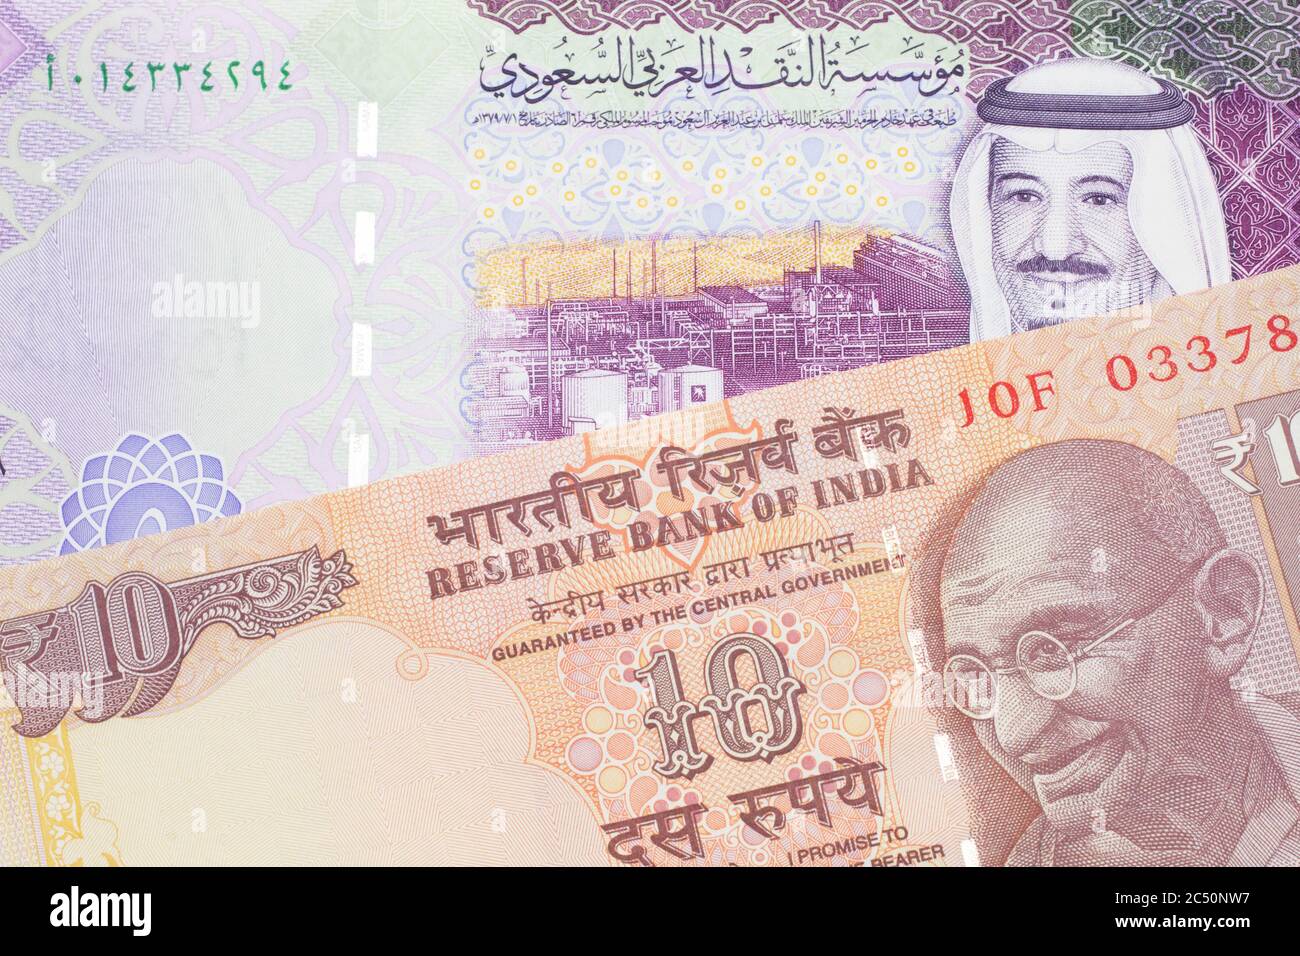 Saudi 1 riyal india come rupees